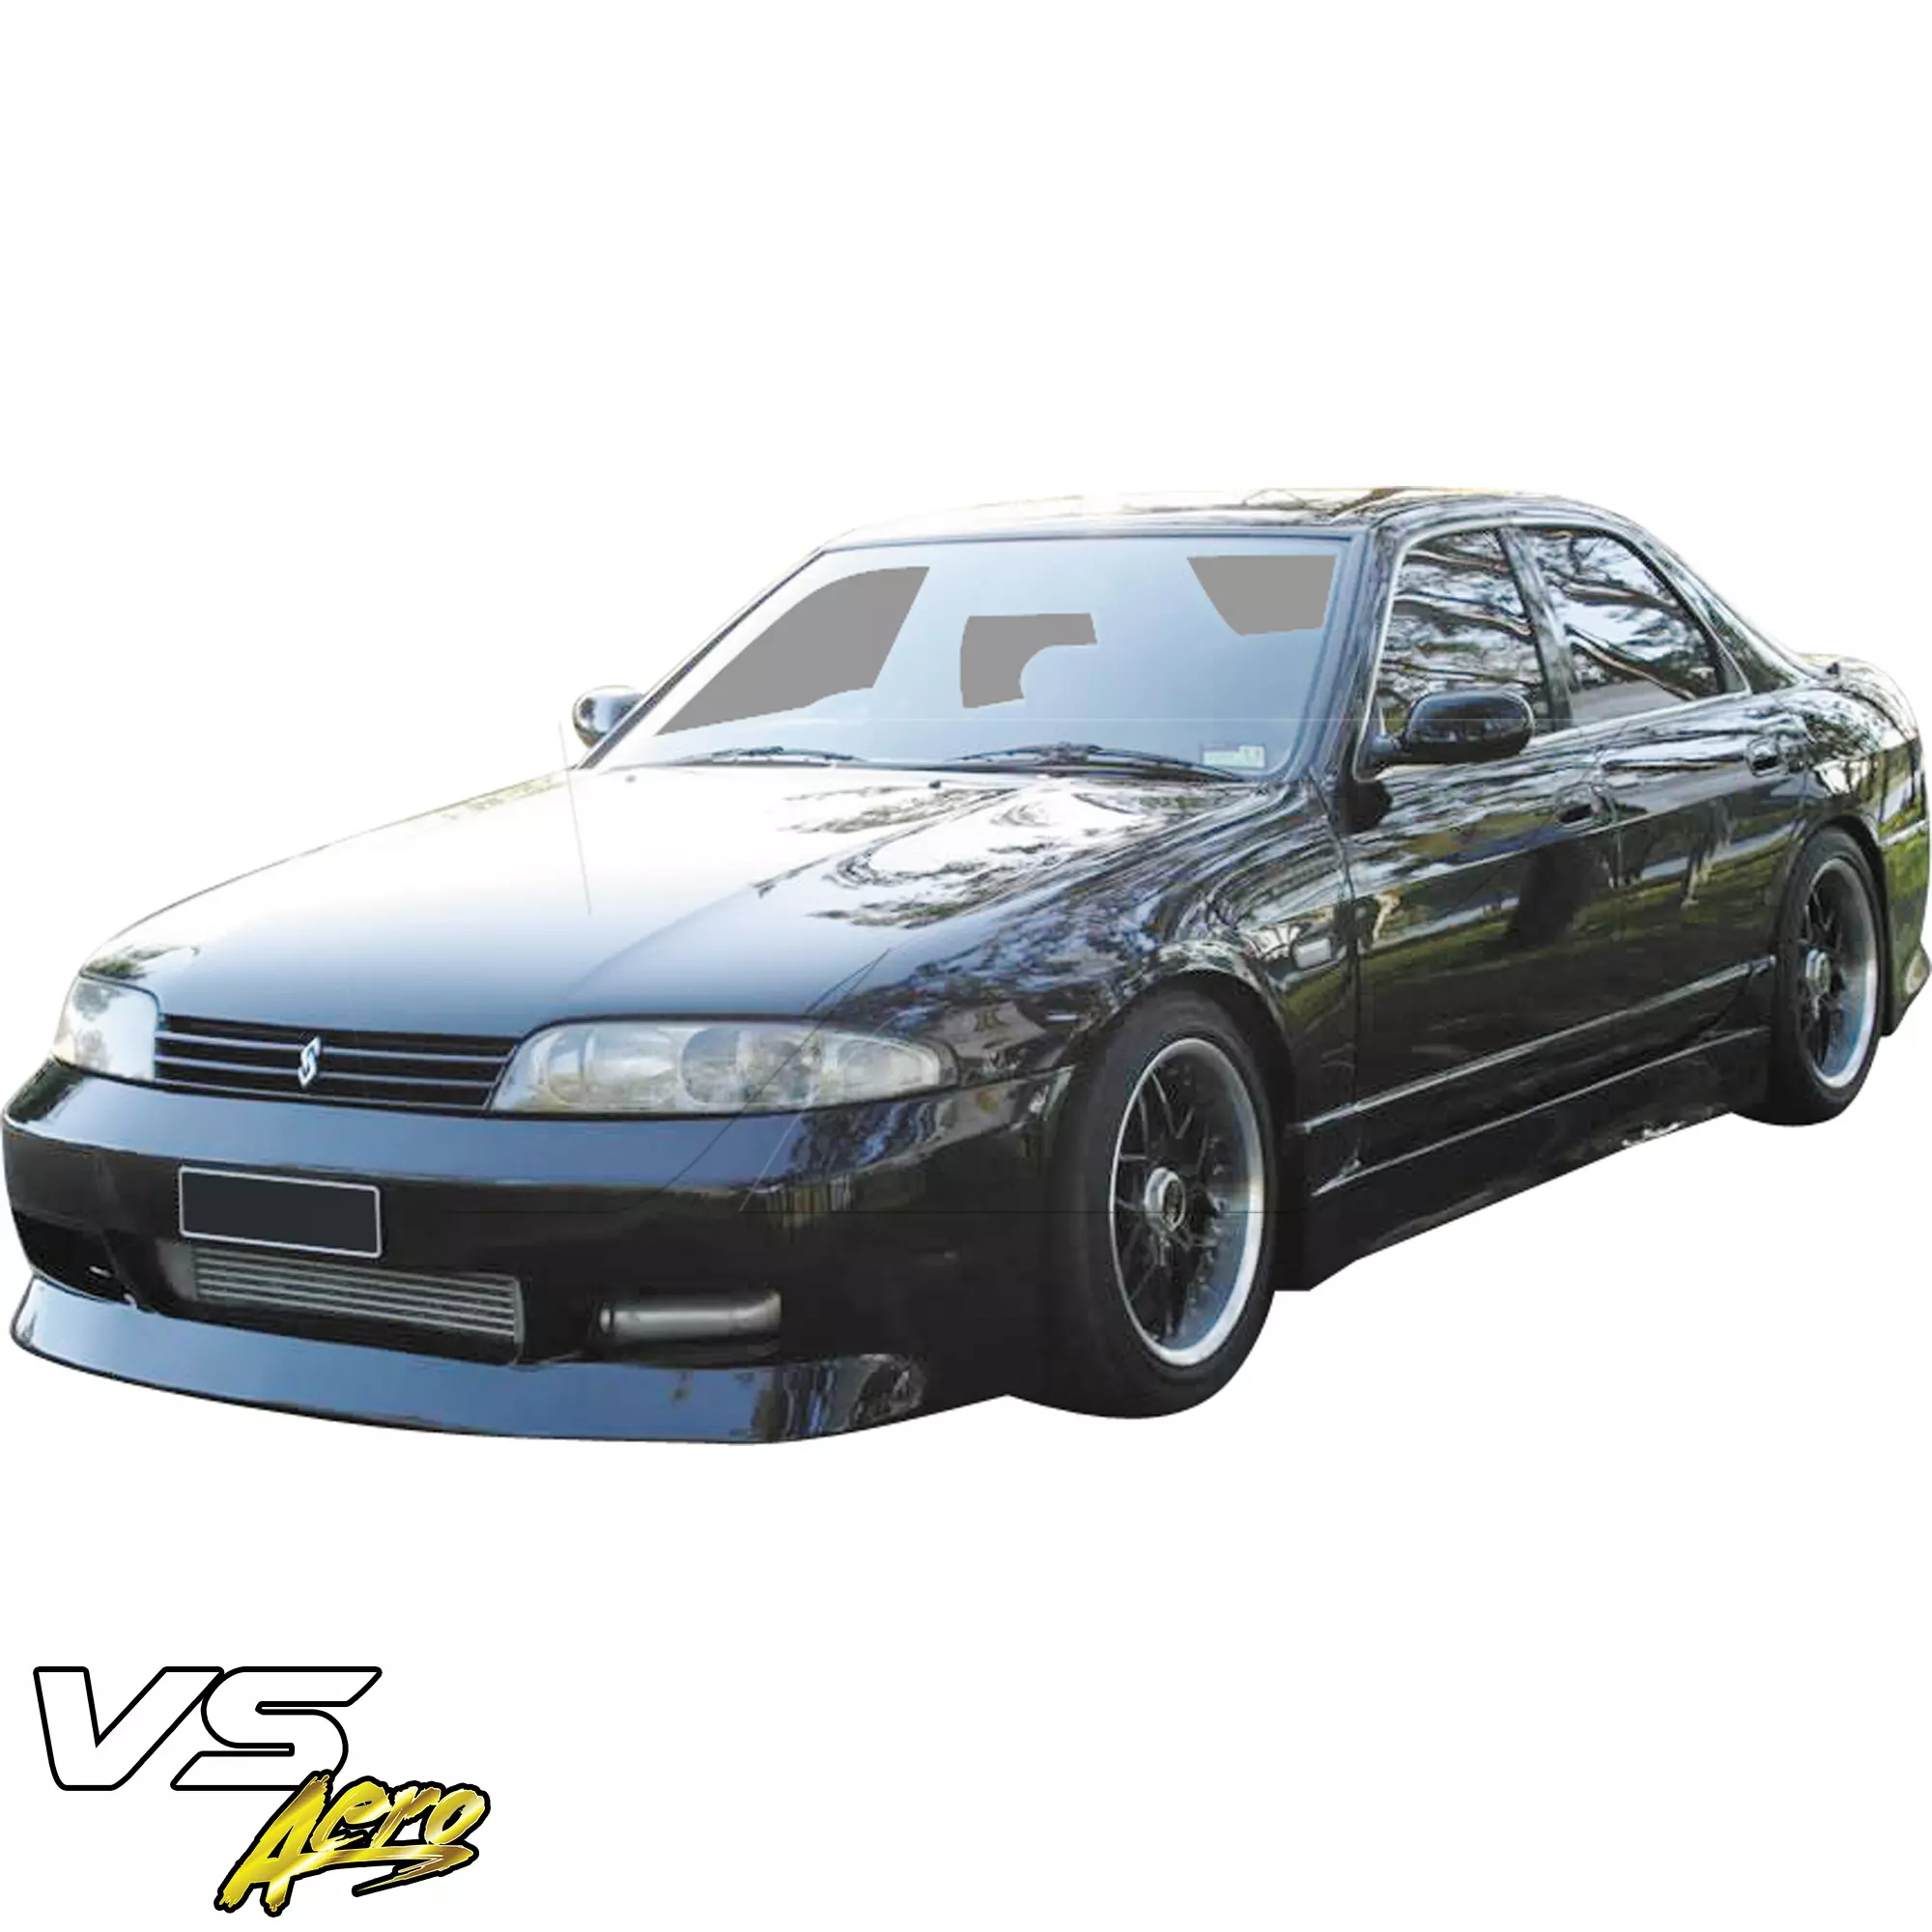 VSaero FRP FKON Body Kit 4pc > Nissan Skyline R33 GTS 1995-1998 > 4dr Sedan - Image 9